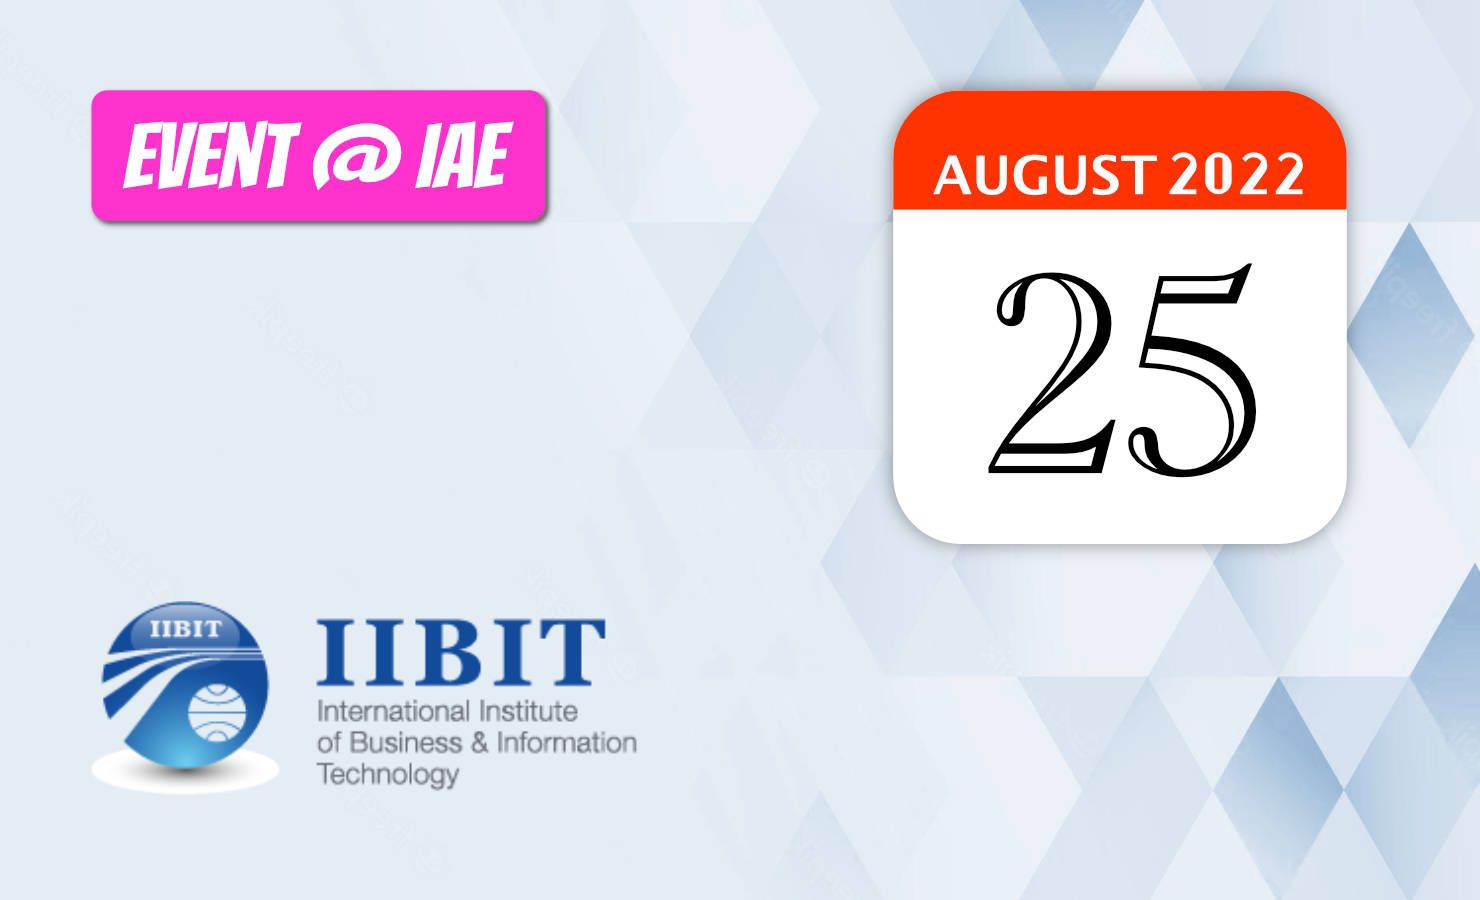 IIBIT (Australia) at iae - visit iae on 25th Aug 2022 and meet the official representative!